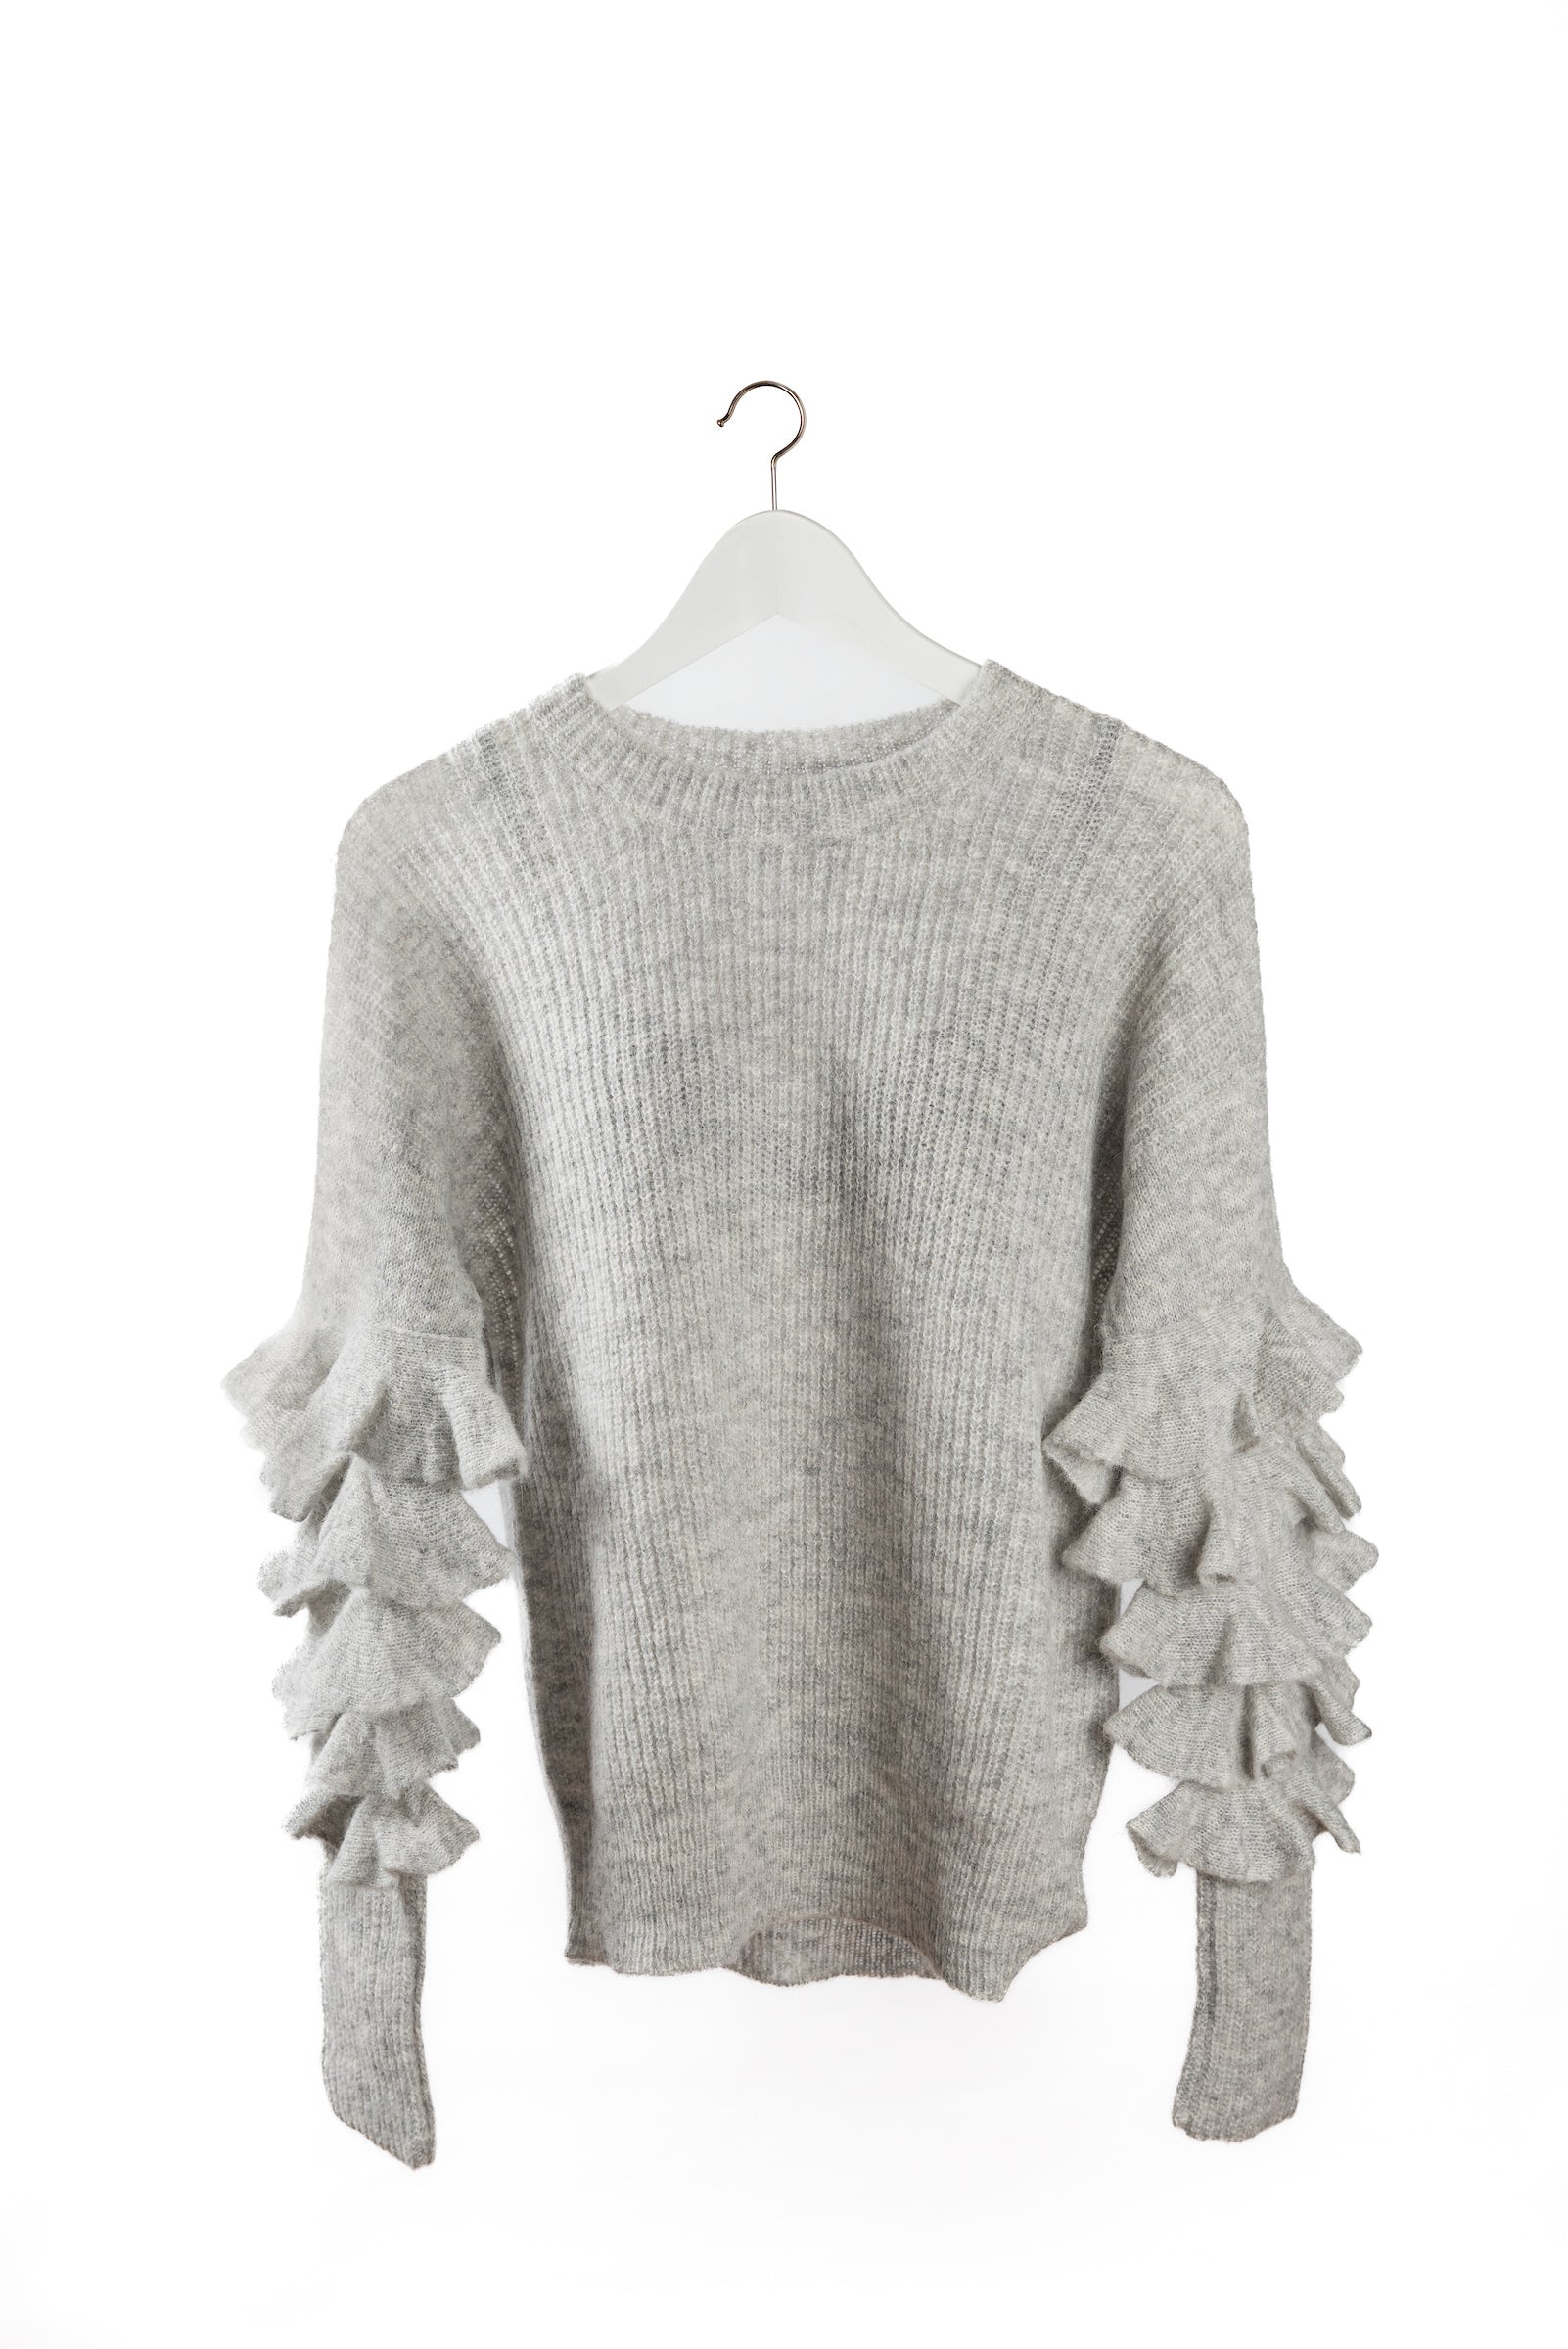 Clio Knitwear- Caribe Sweater Grey